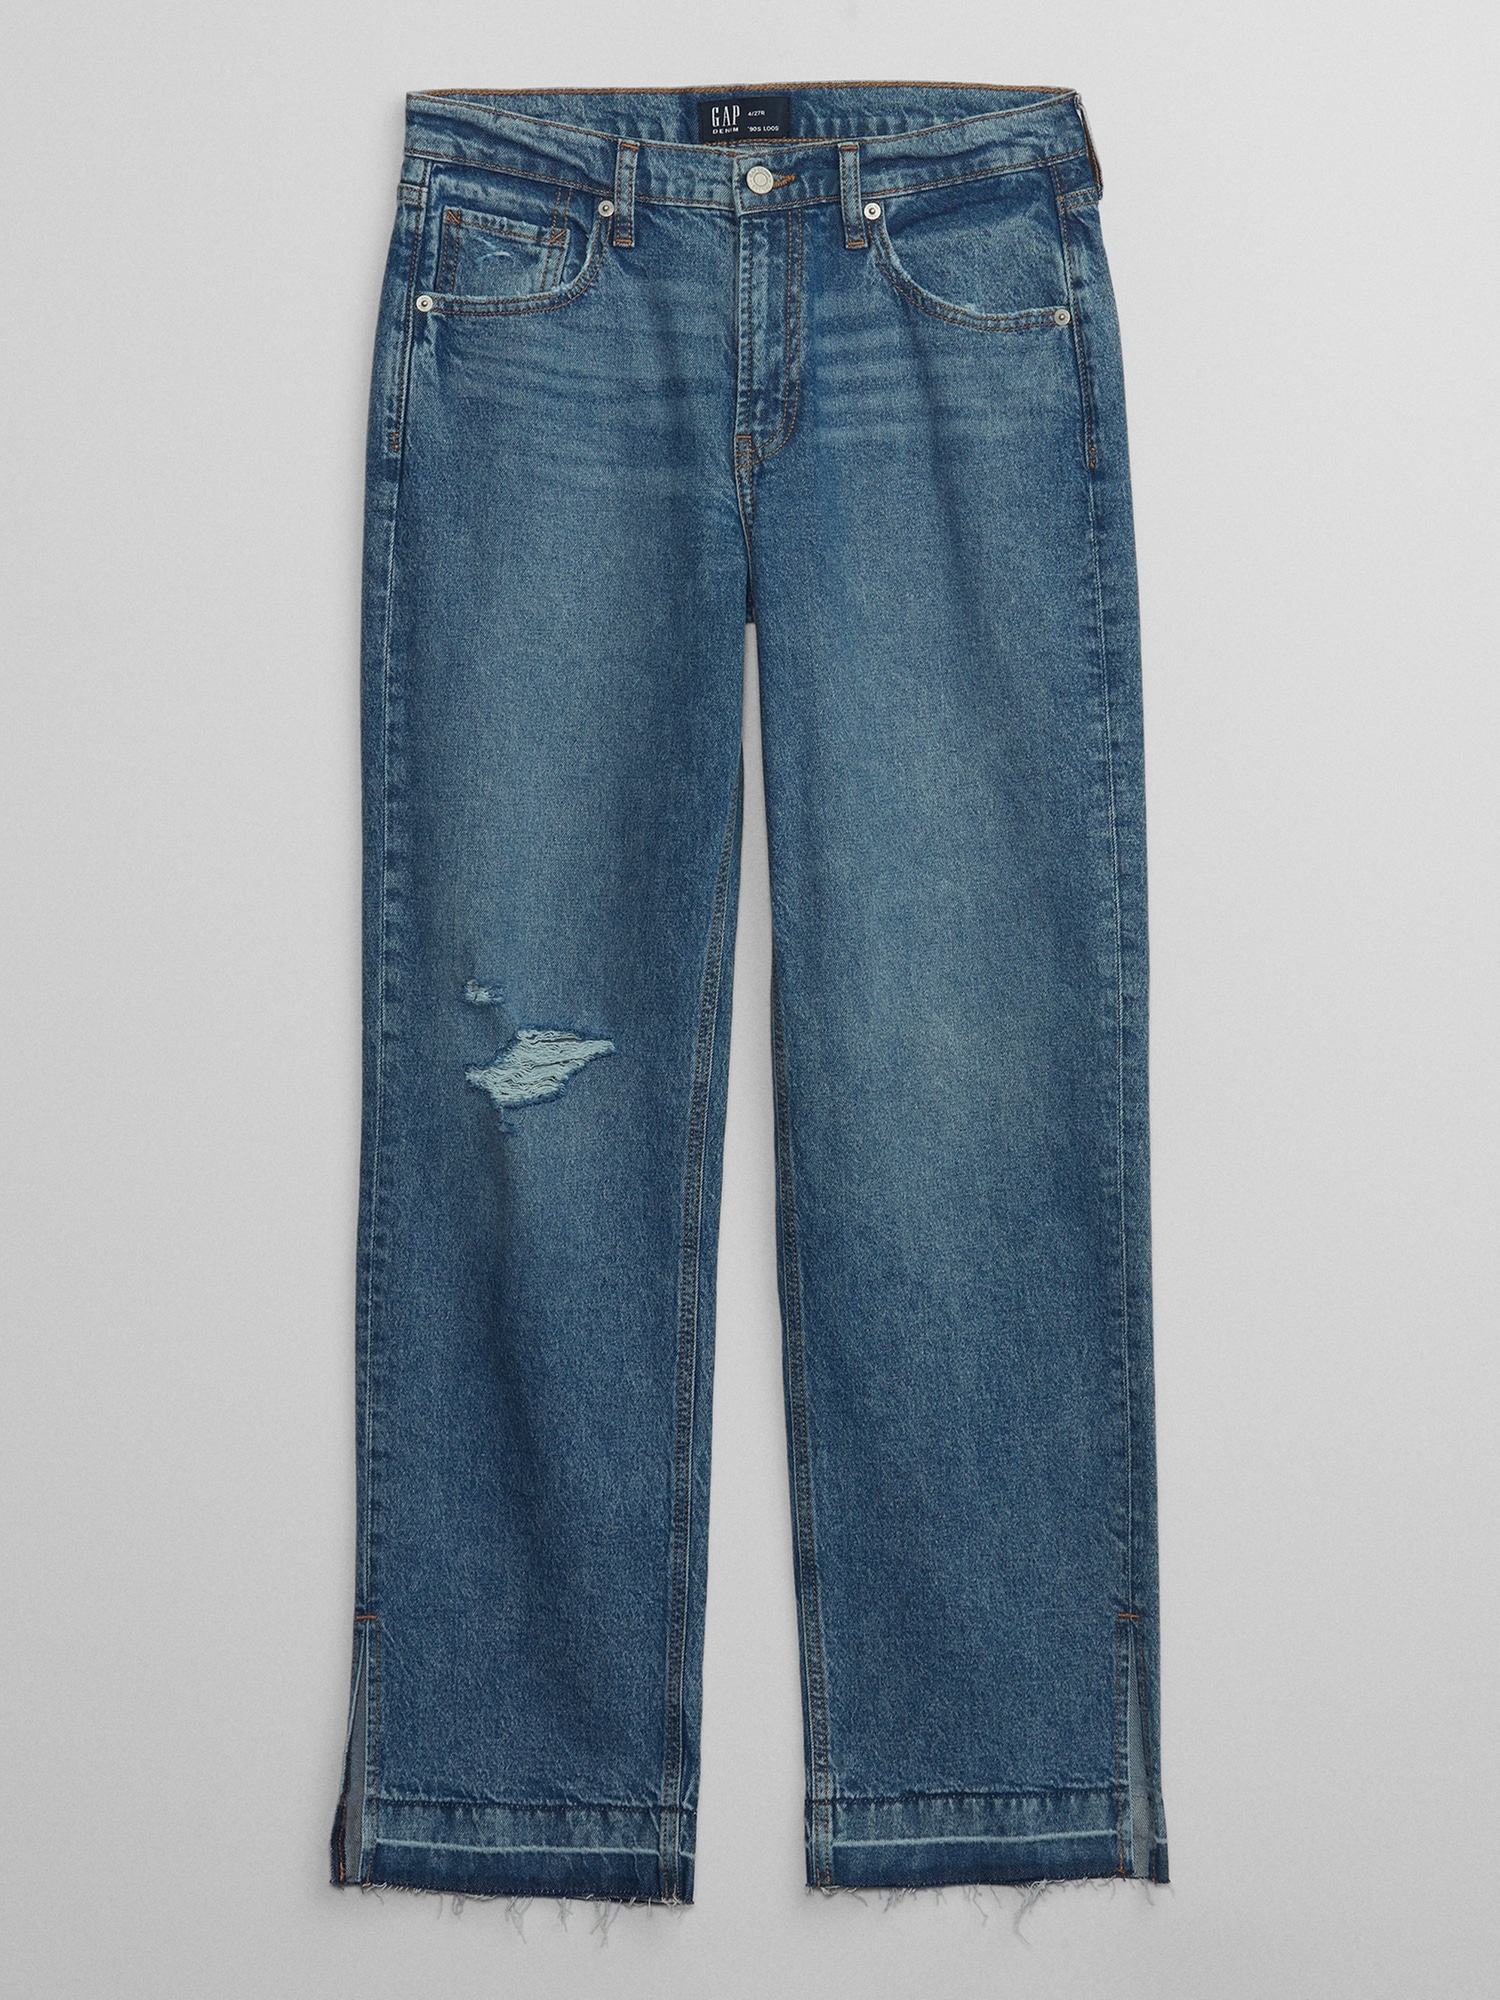 Shop Men MEDIUMWAS '90s Original Straight Jeans with Washwell - 14 KWD in  Kuwait